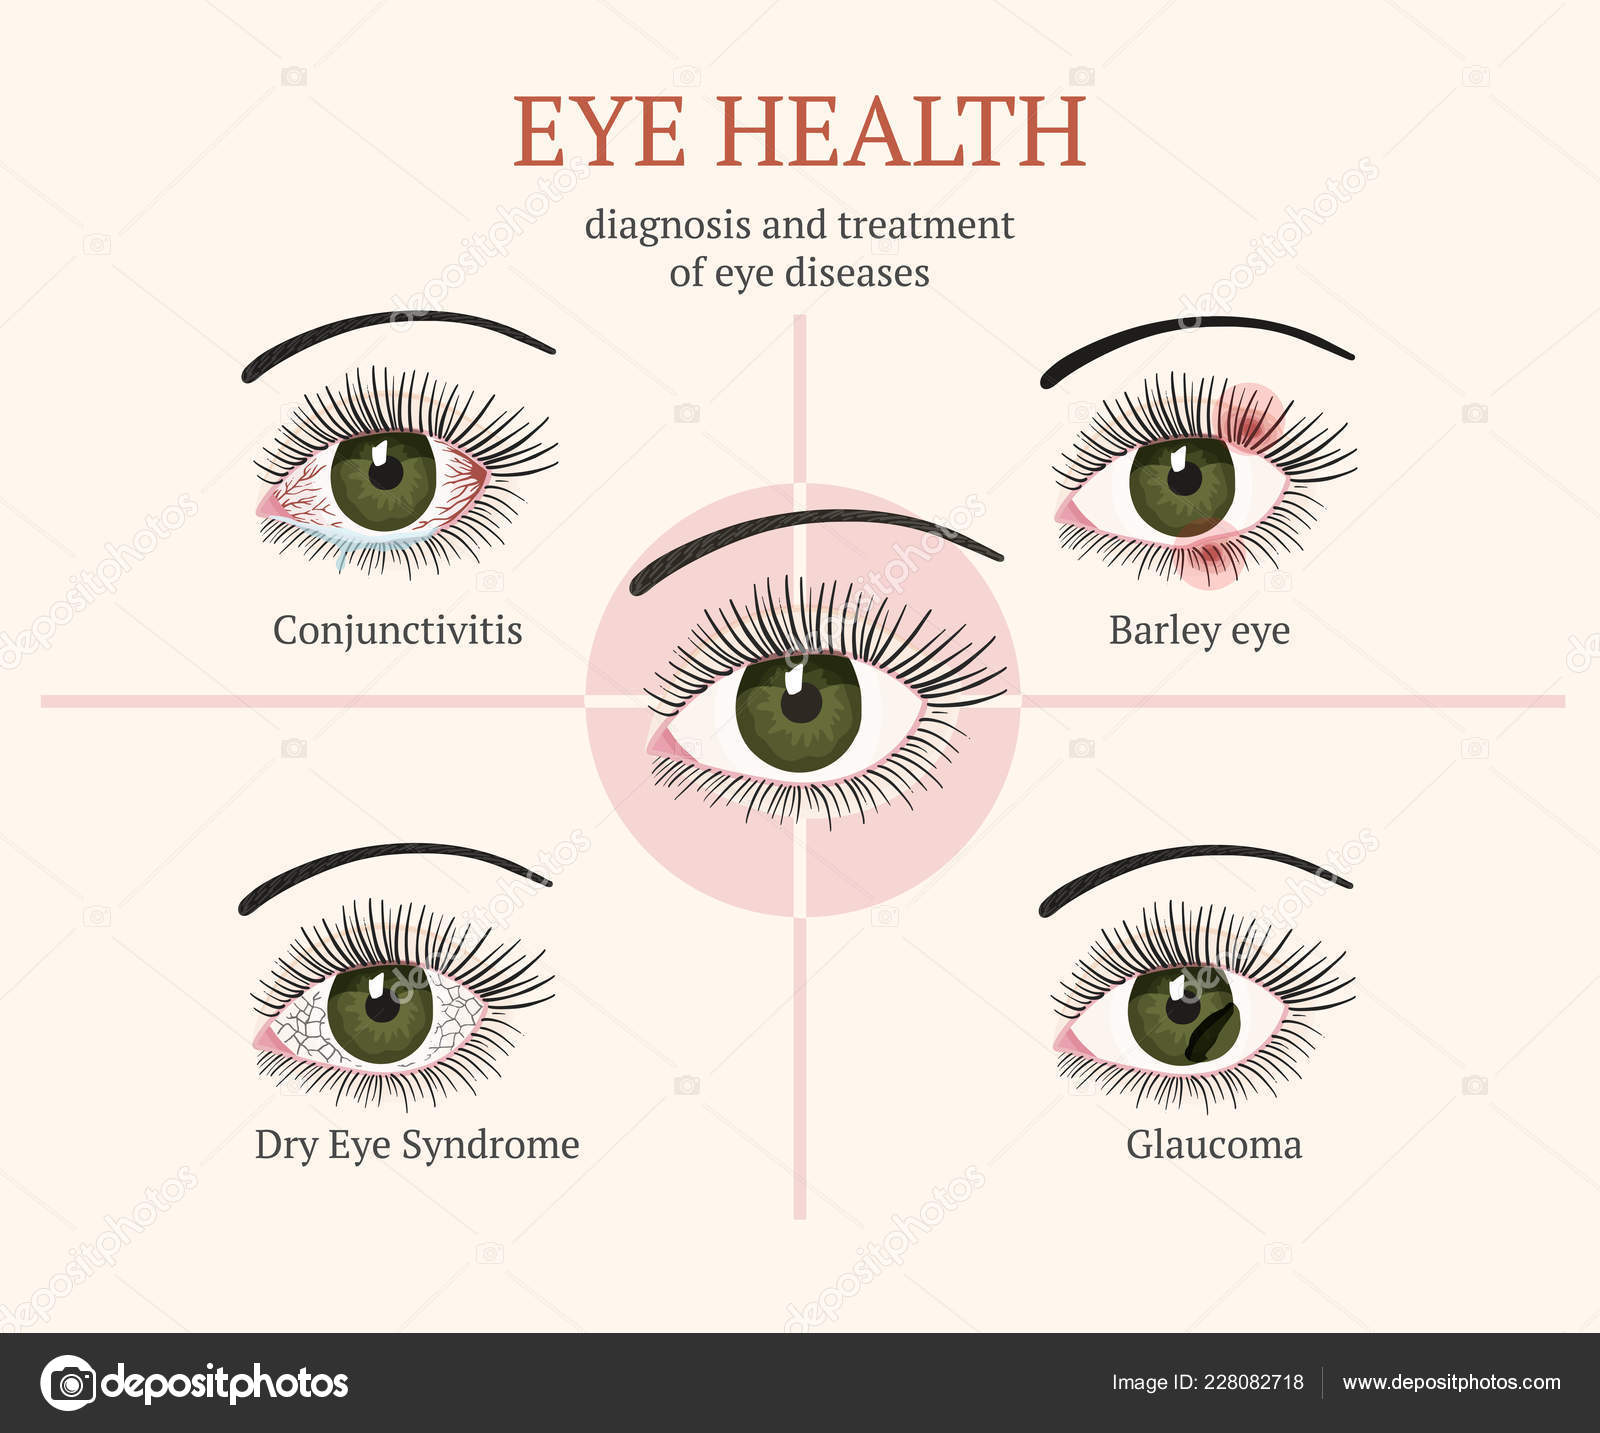 Common Eye Problems - Baptist Health